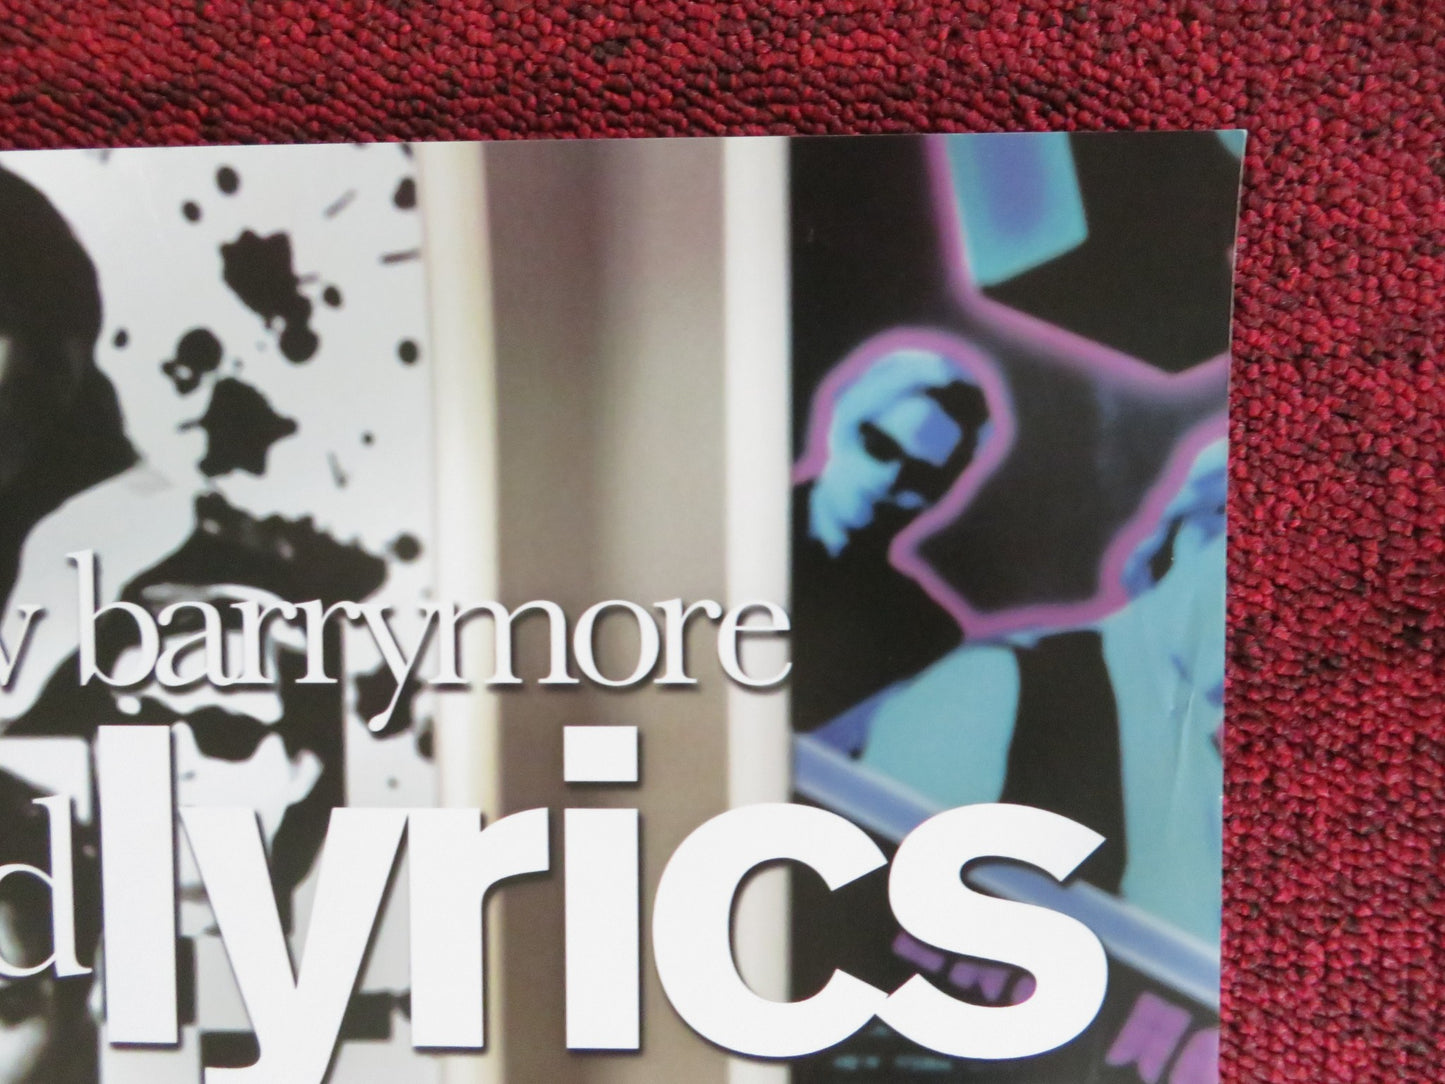 MUSIC AND LYRICS DVD POSTER HUGH GRANT DREW BARRYMORE 2007